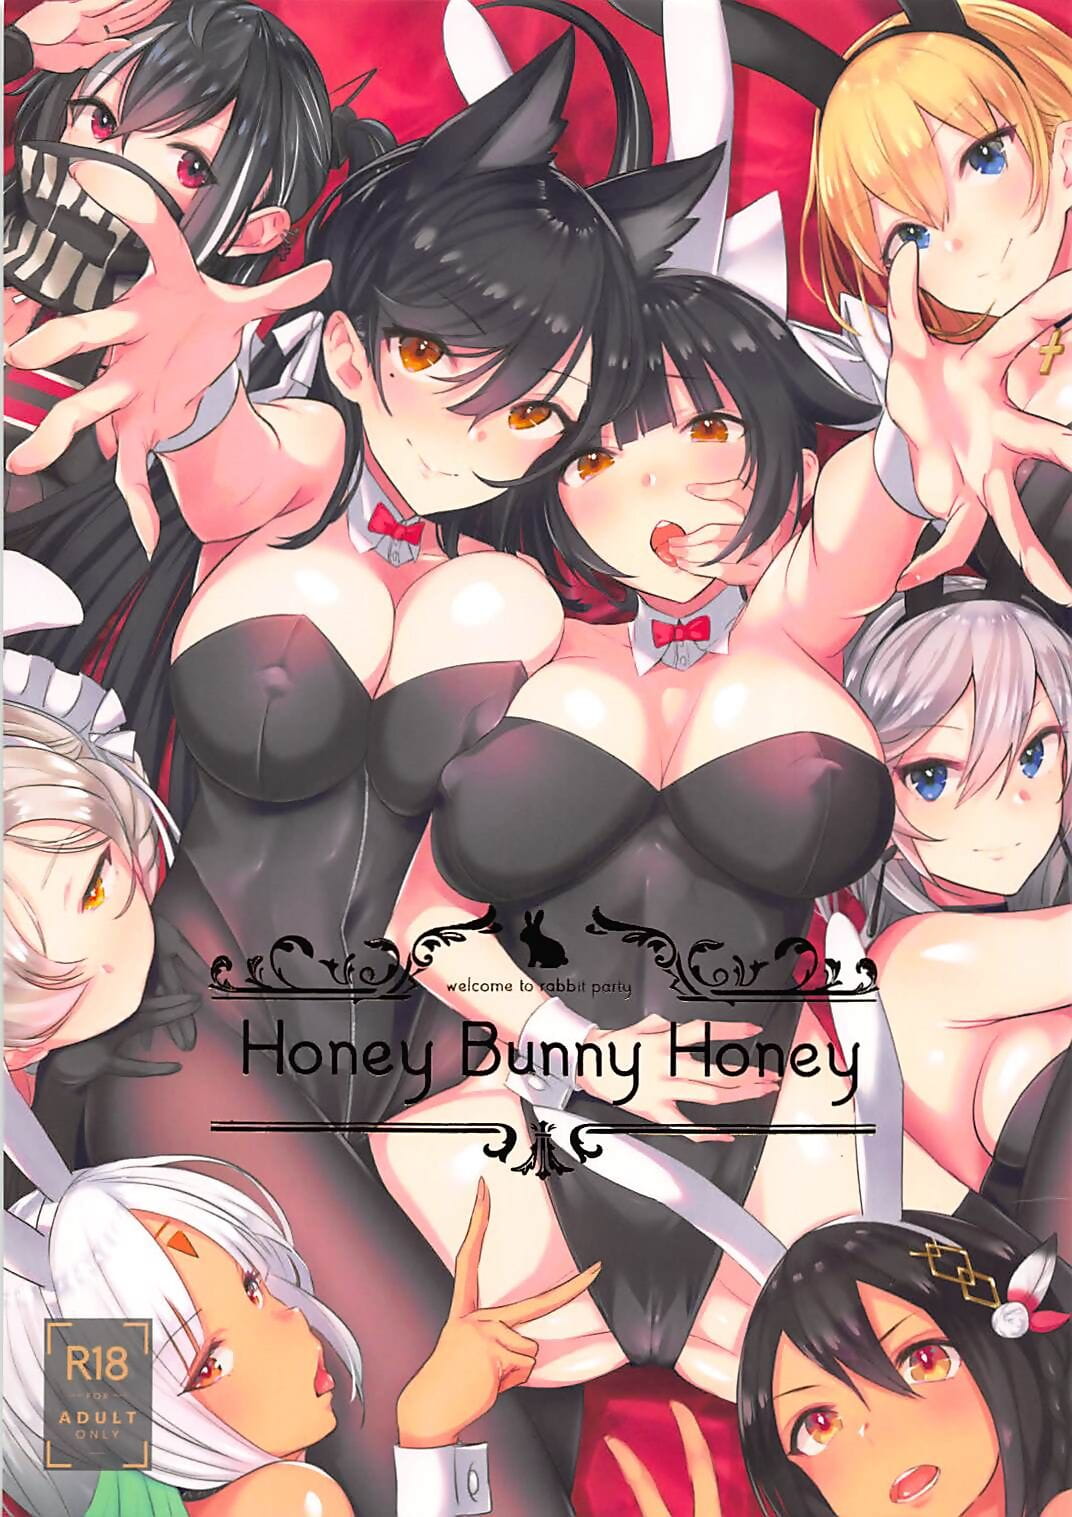 Honig Bunny Honig page 1